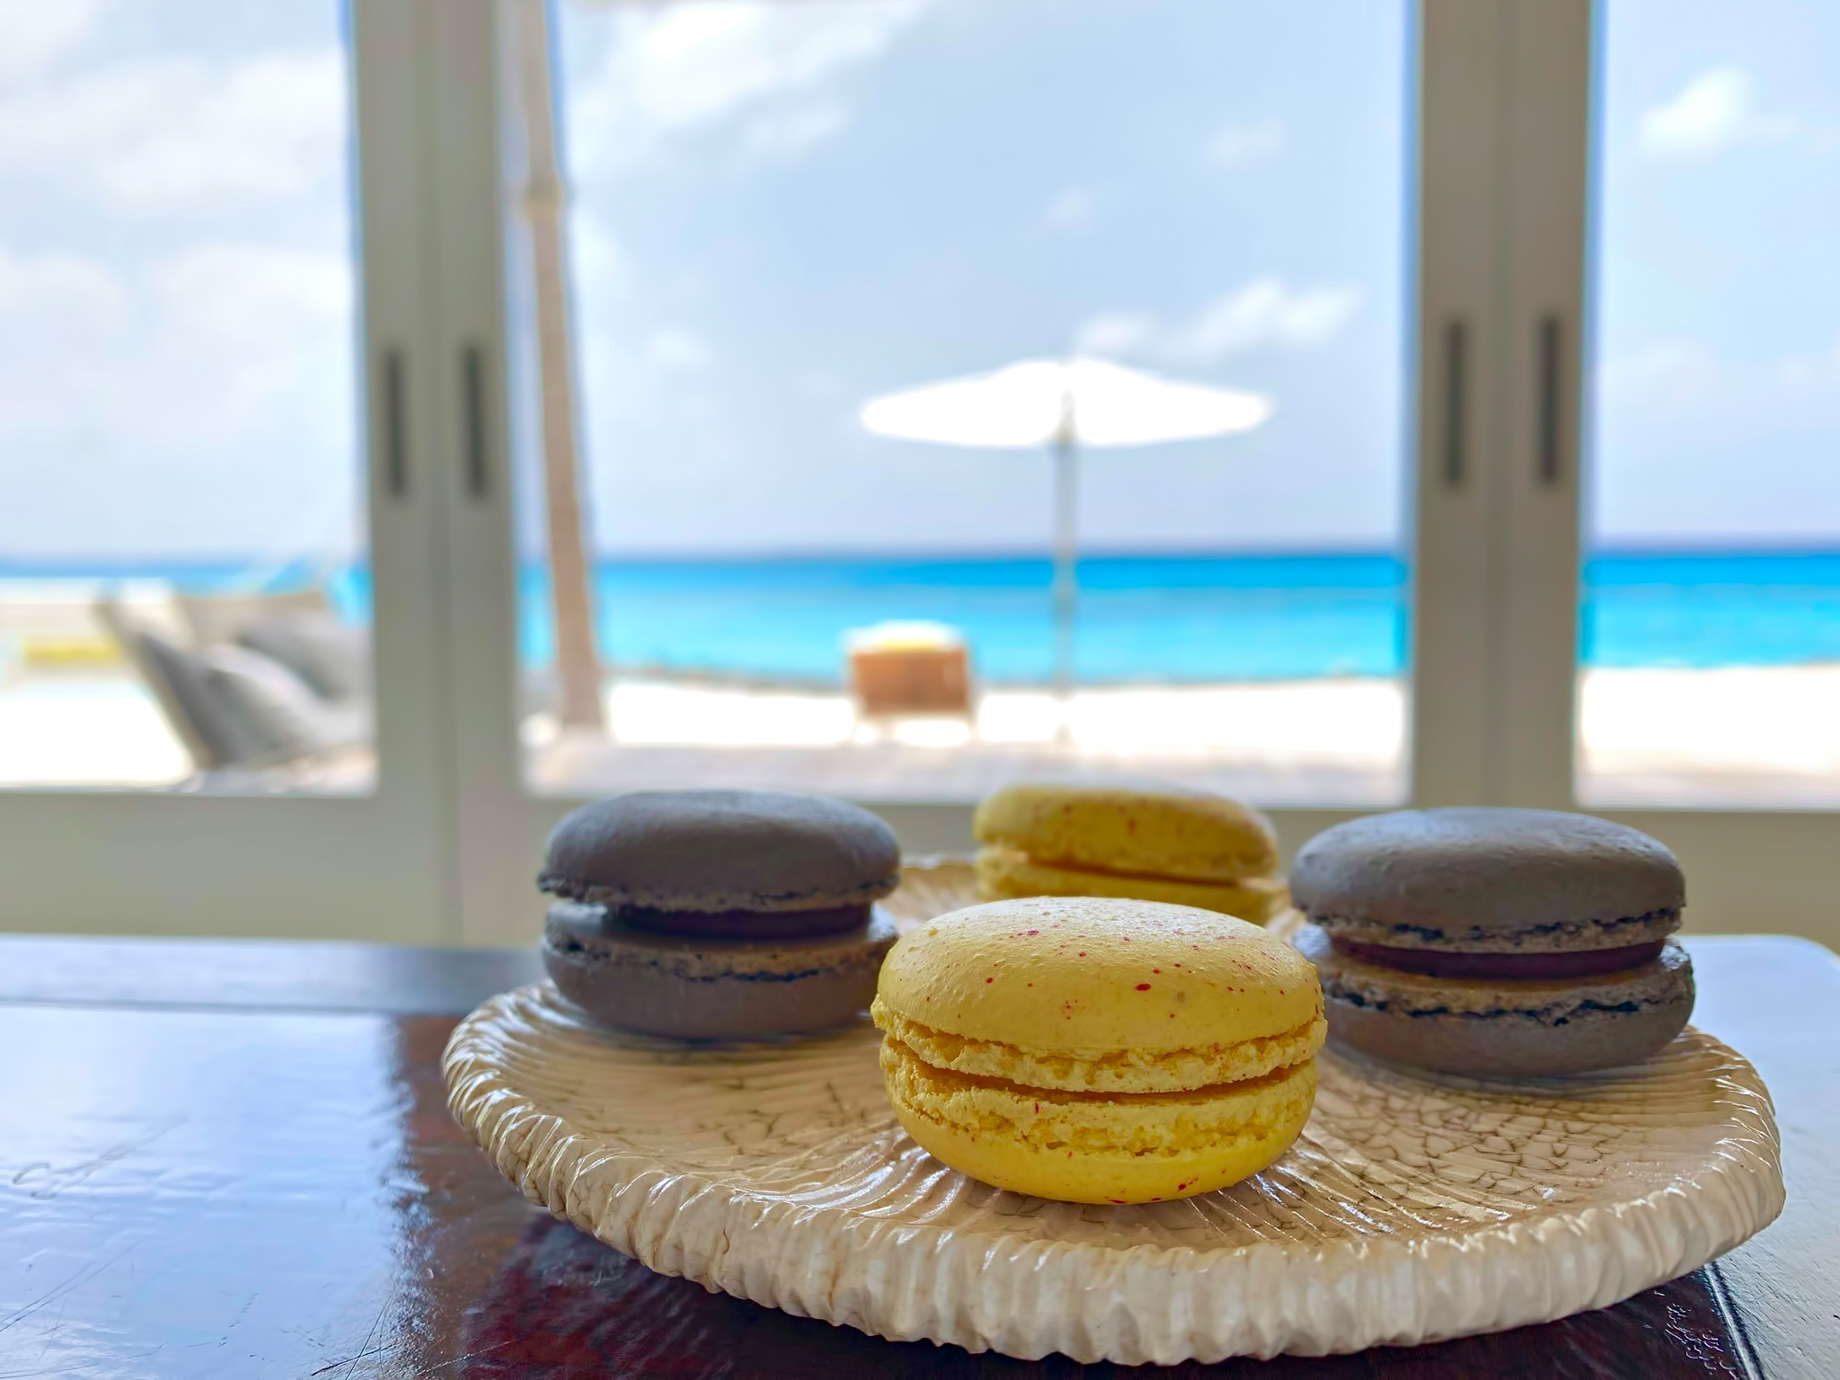 Cheval Blanc Randheli Resort - Noonu Atoll, Maldives - Culinary Arts Dessert